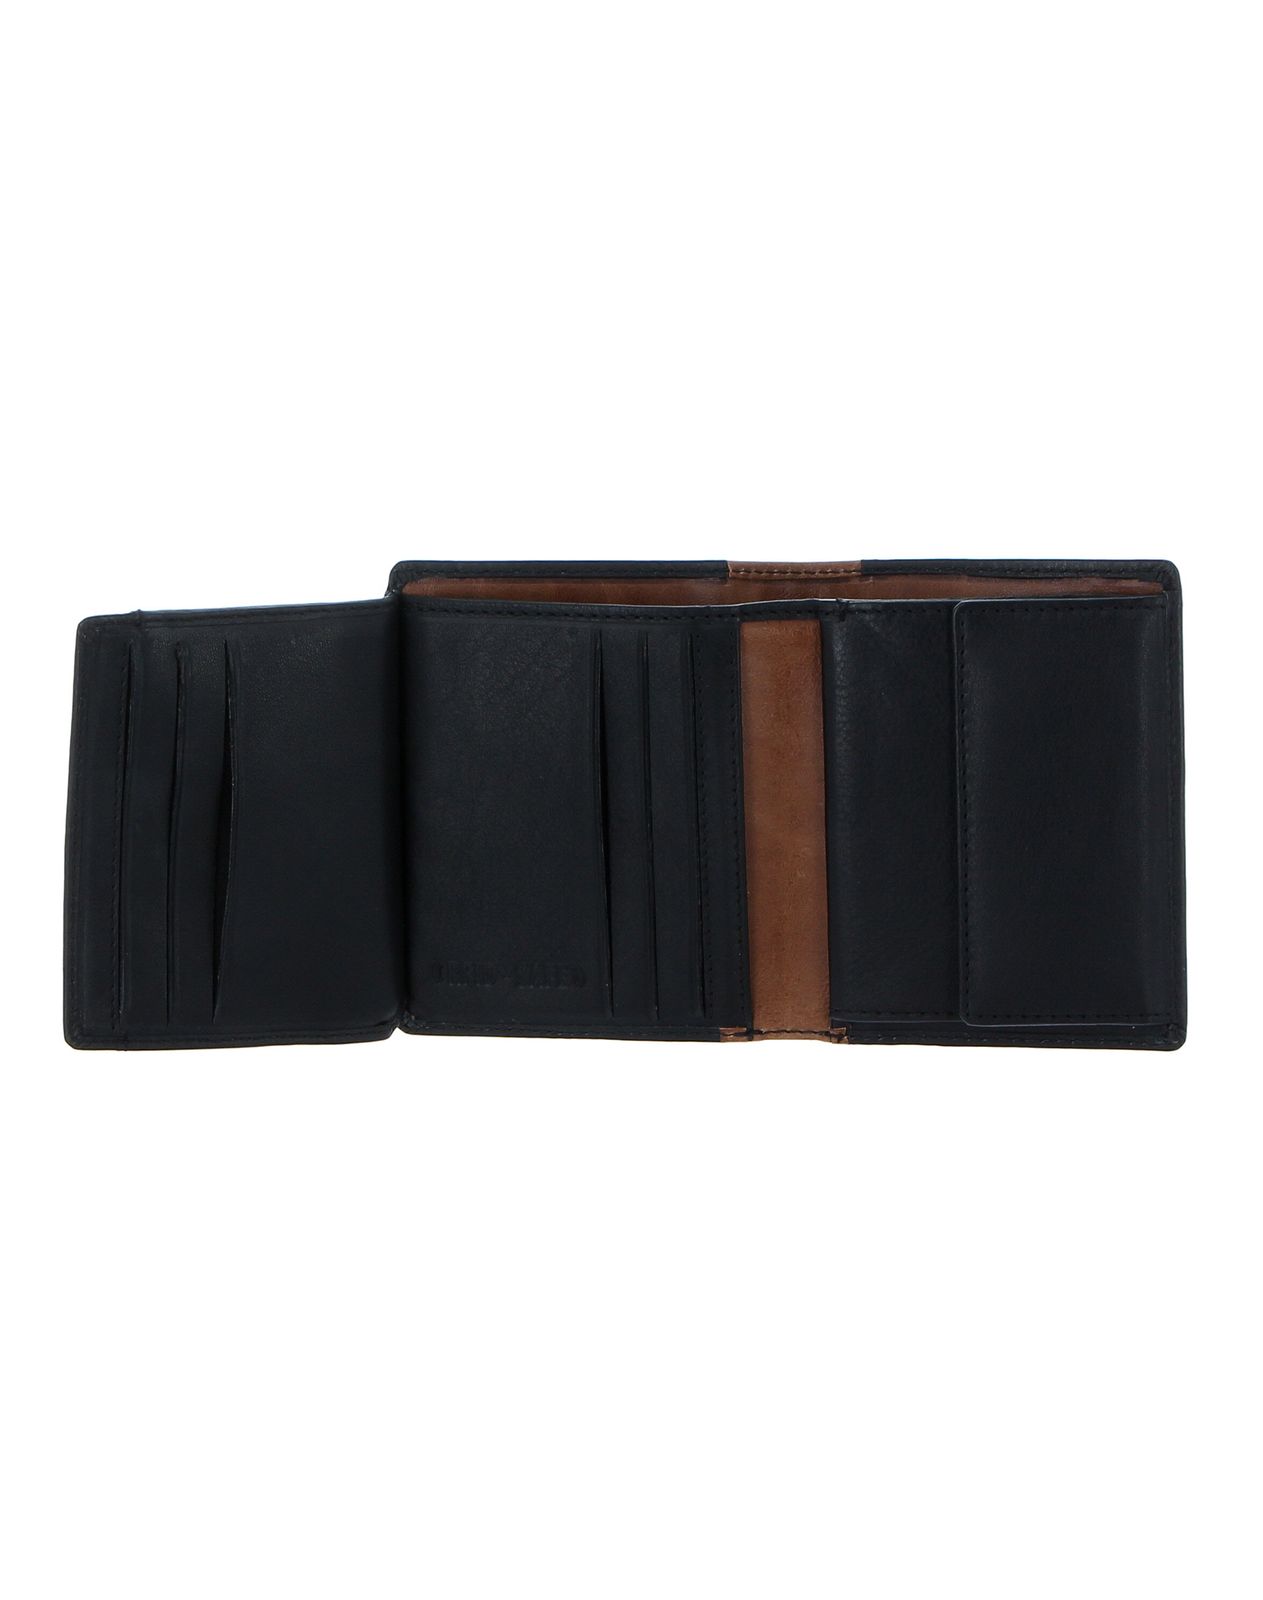 Flap Black Cognac Wallet modeherz / with | CHIEMSEE